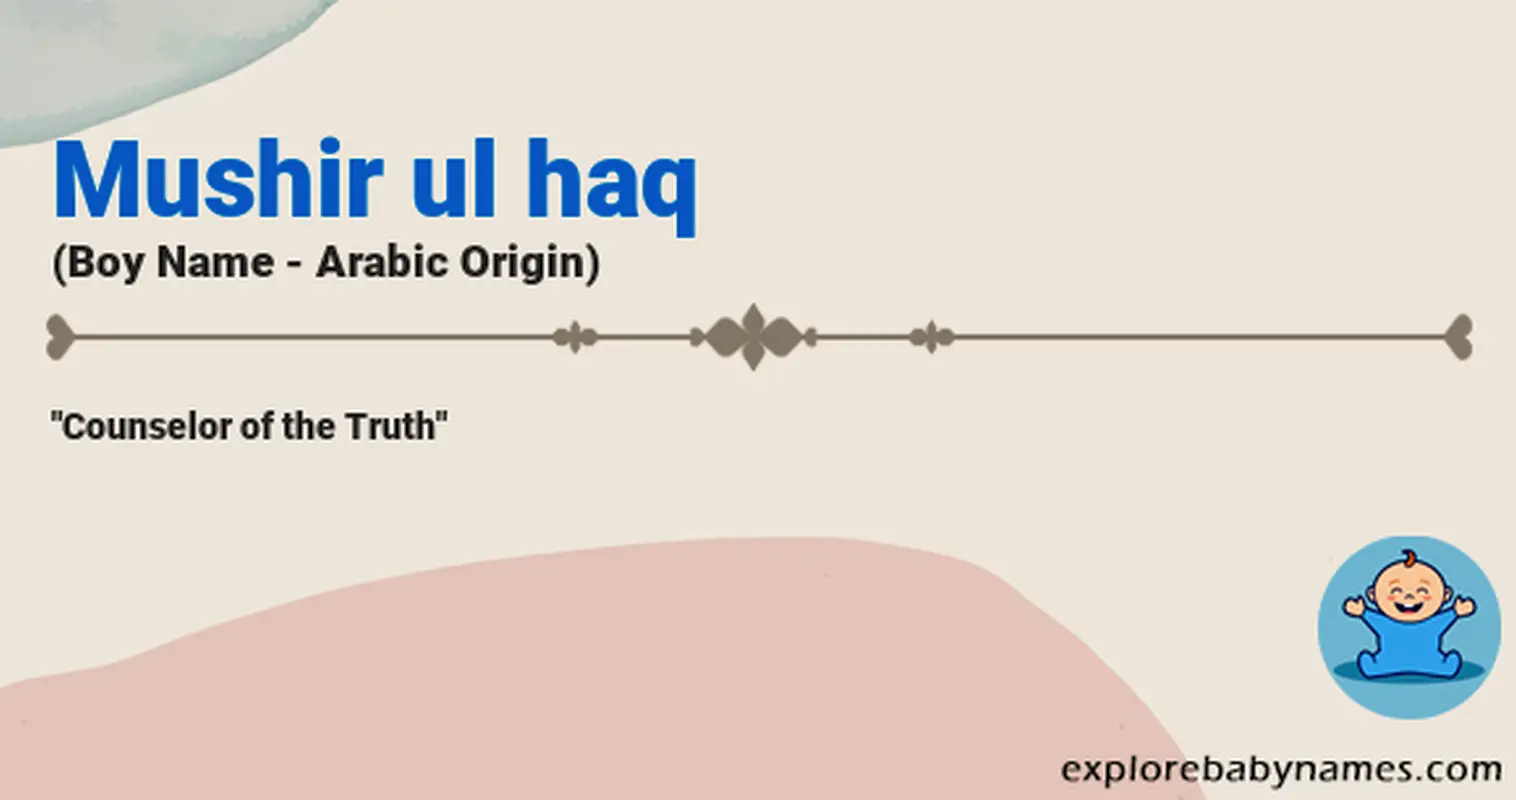 Meaning of Mushir ul haq